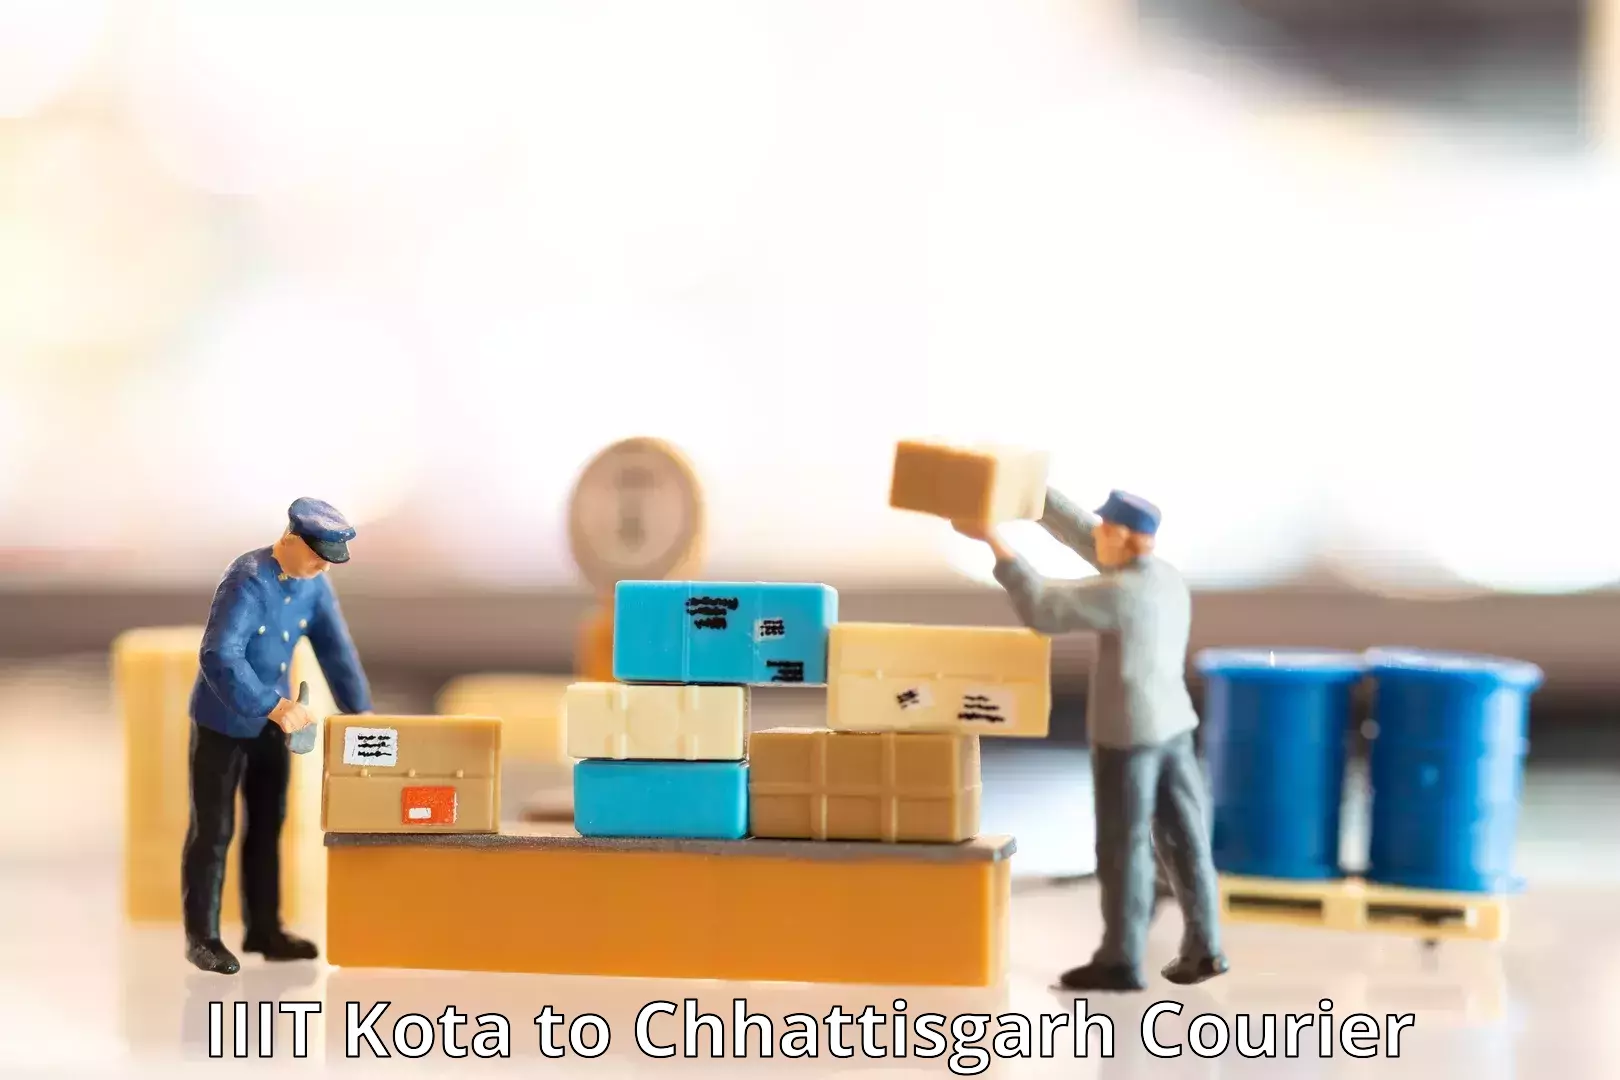 Flexible delivery scheduling IIIT Kota to Patna Chhattisgarh